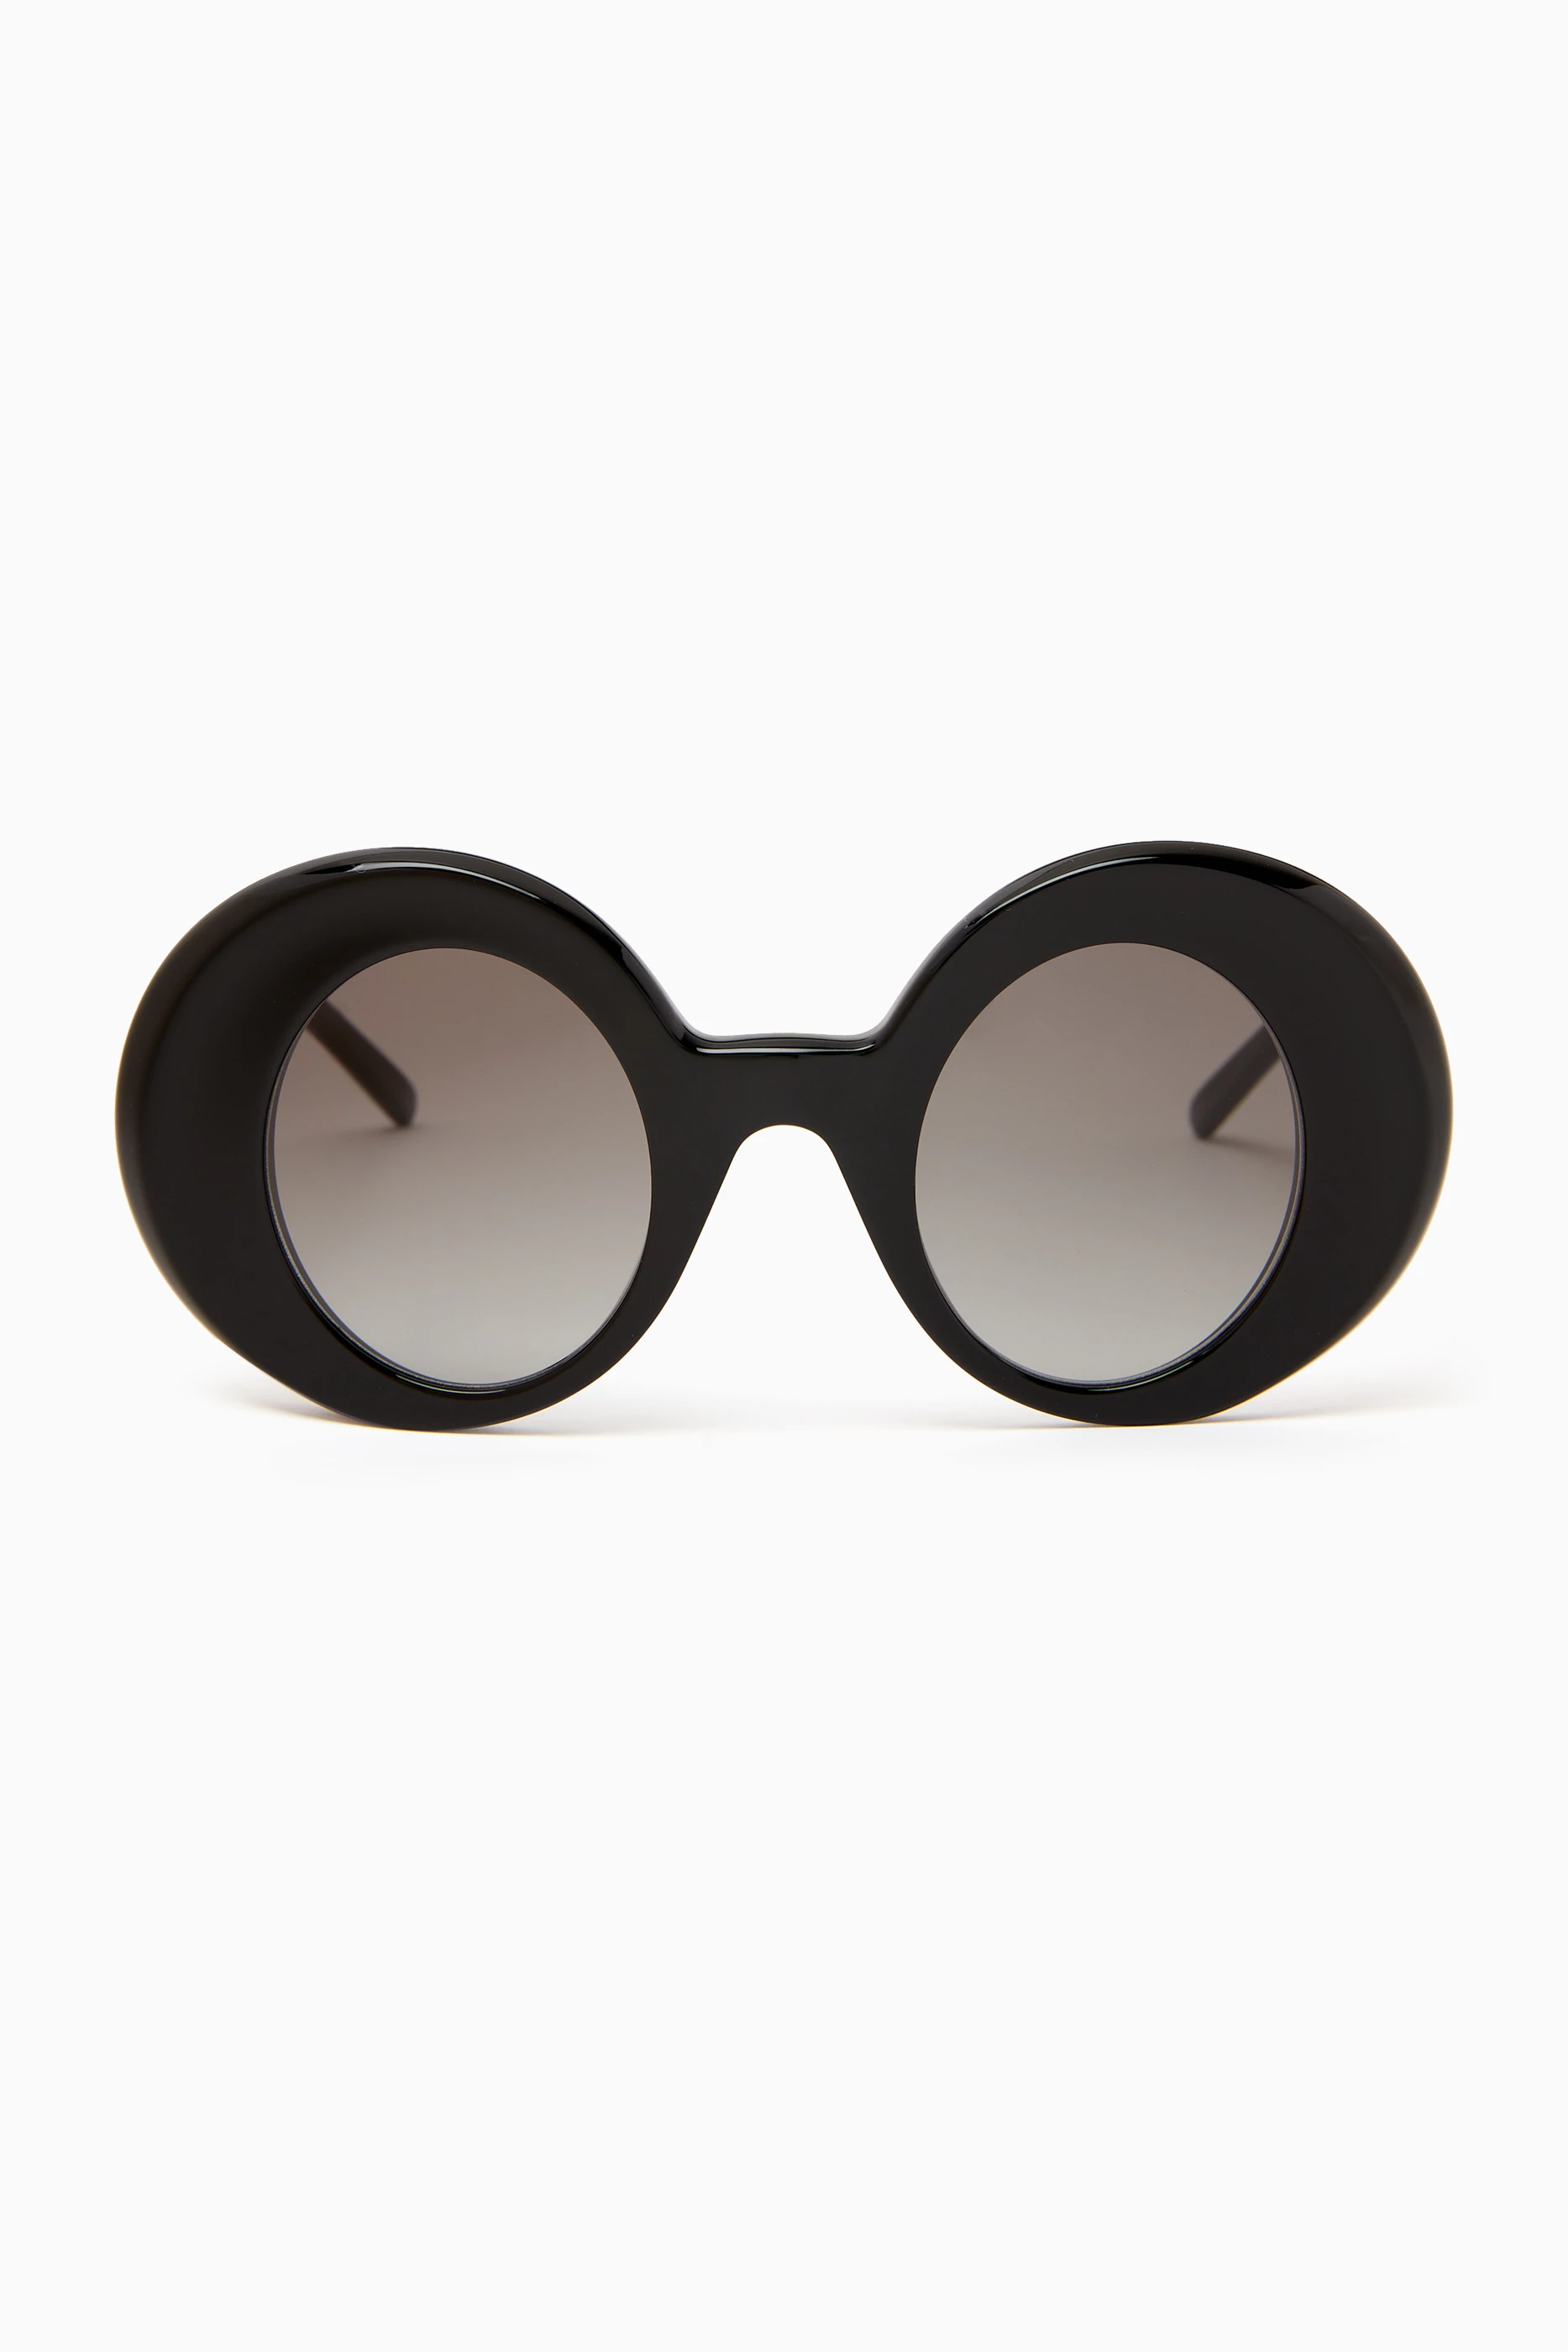 Polarized Sunglasses For Women Retro Rectangle Womens Sun Glasses